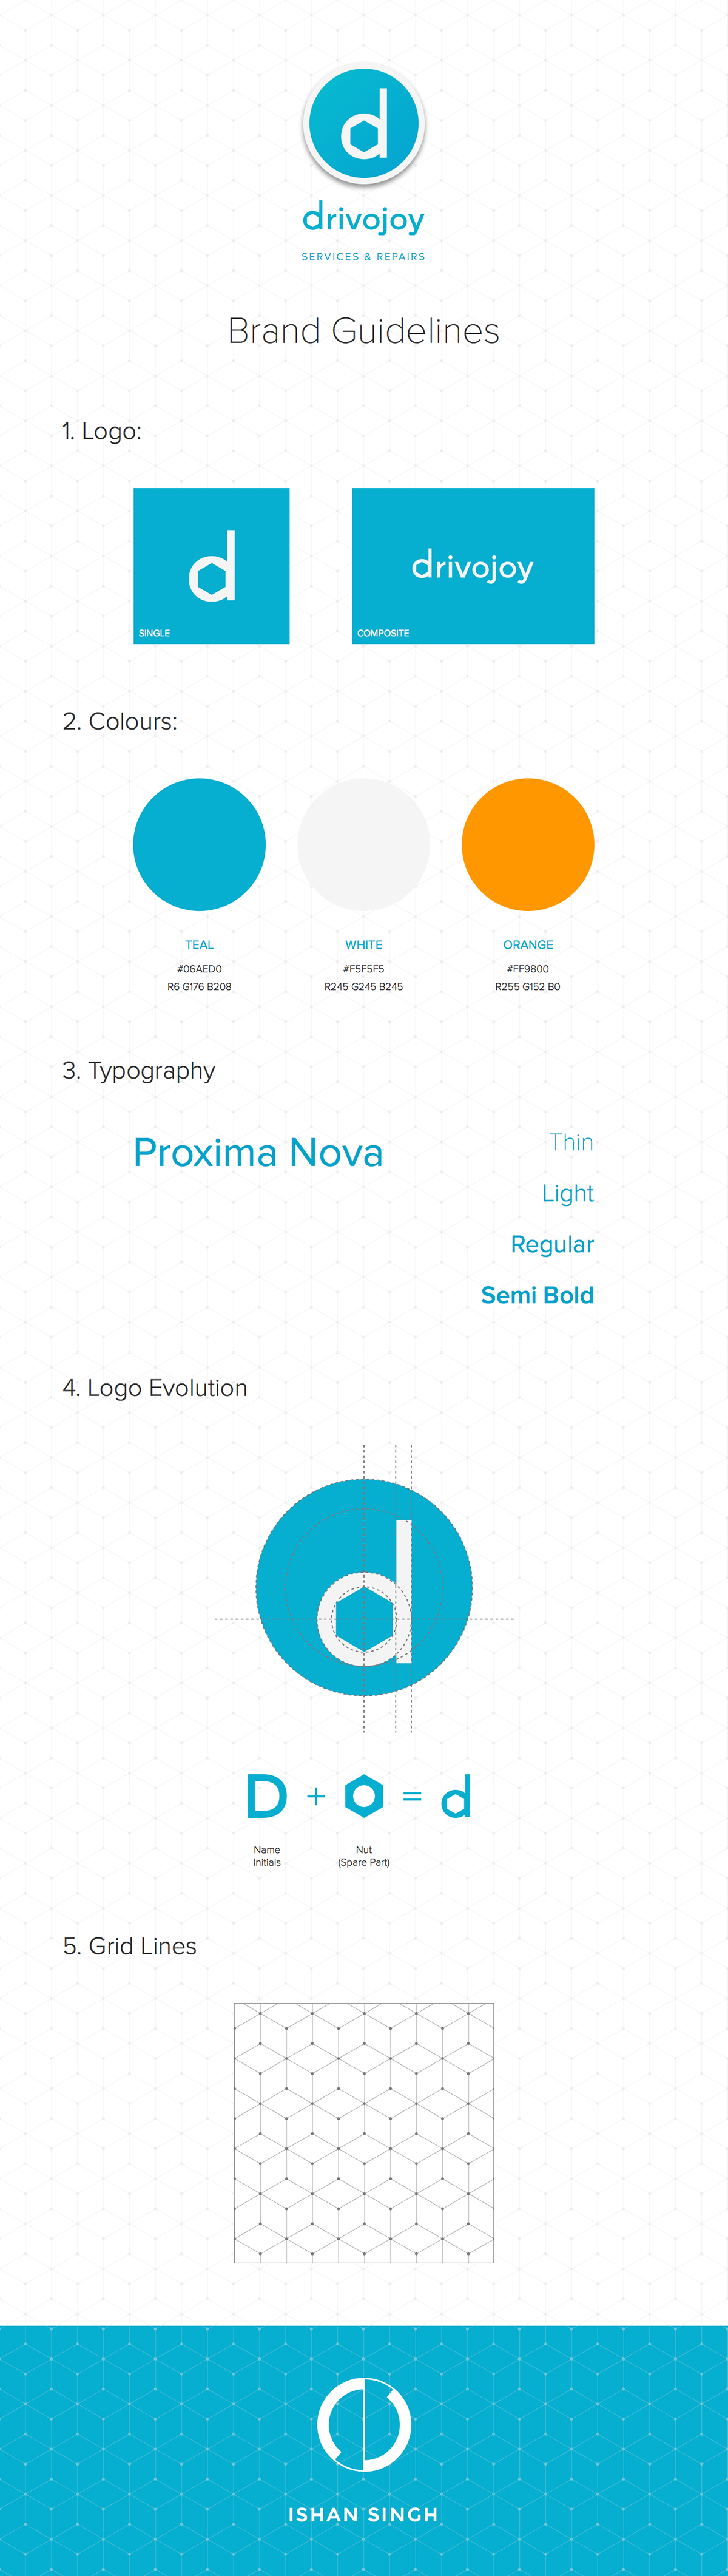 Drivojoy On Demand Mecahnic brand guidelines app icon logo logo evolution Services & Repairs